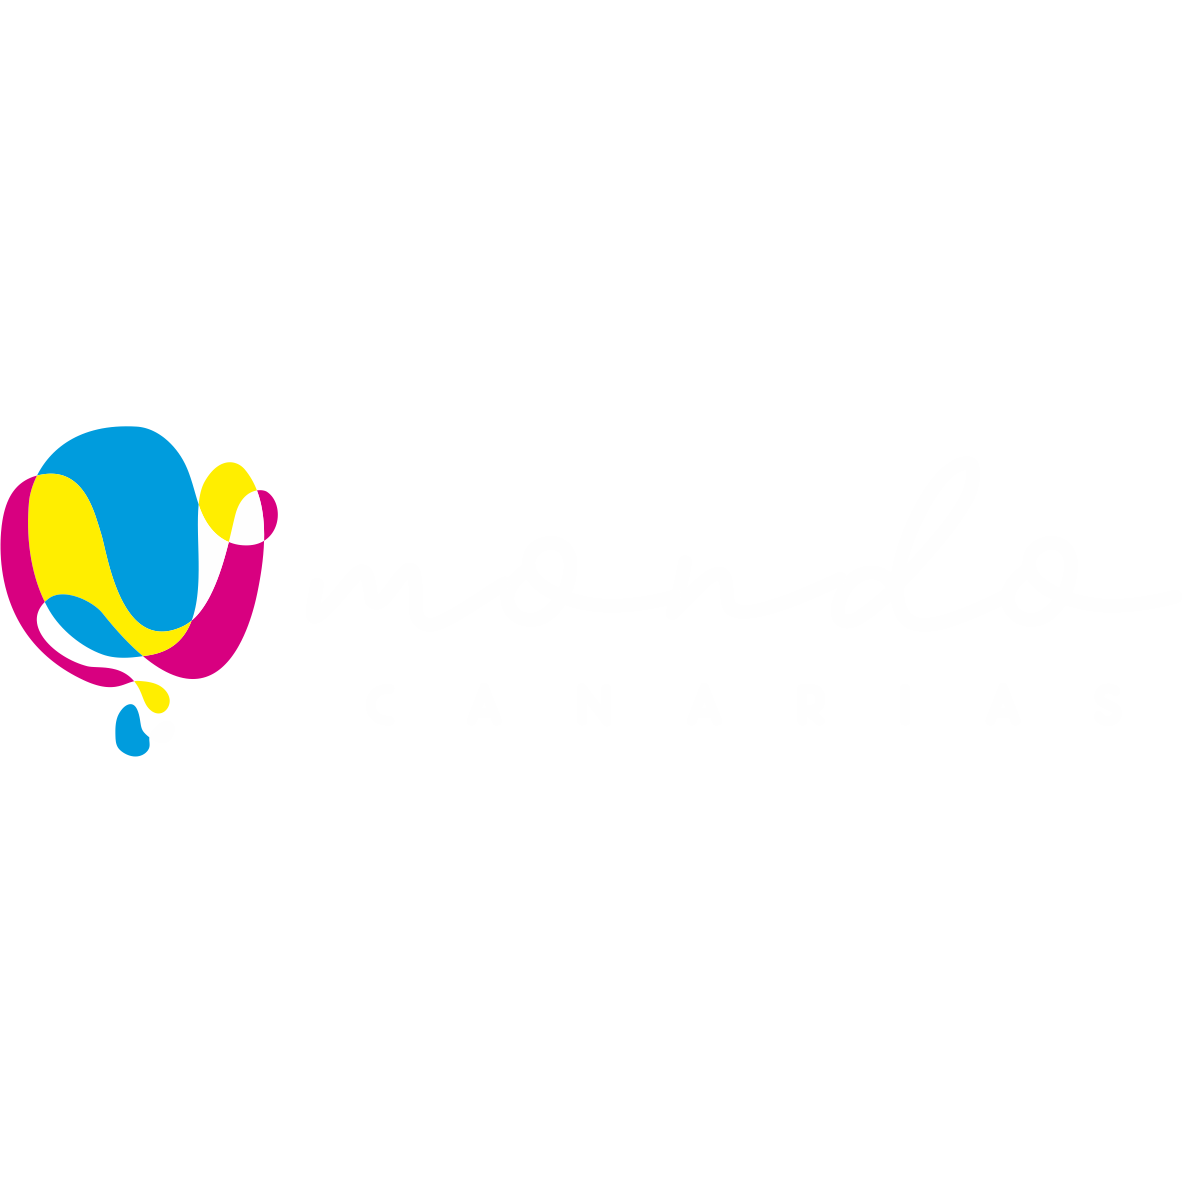 Logo Mondocanarias